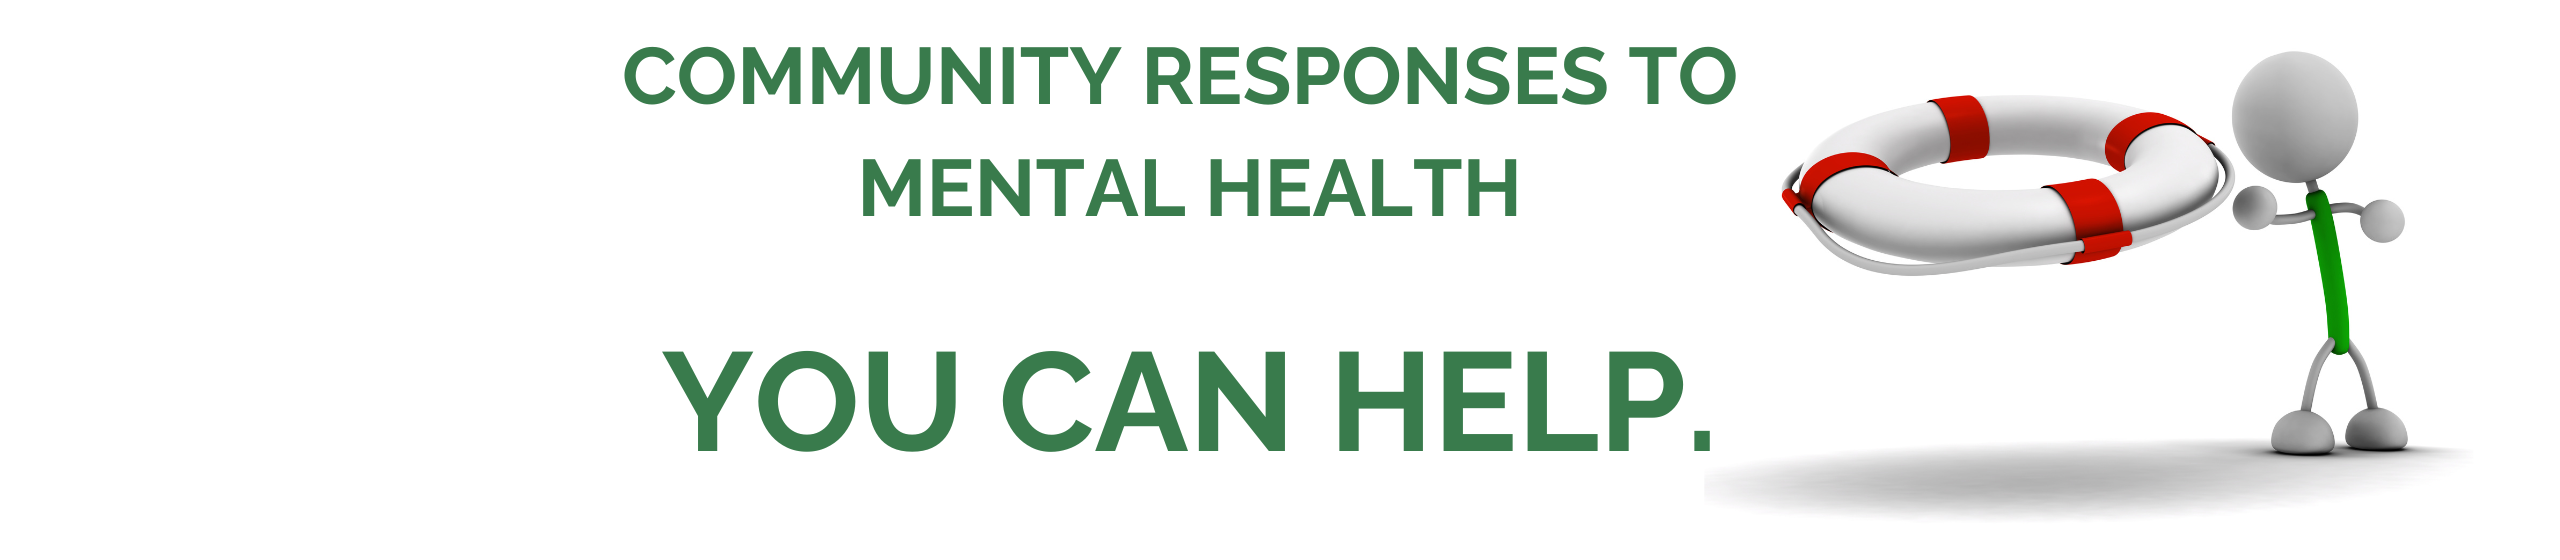 Community Responses to Mental Health